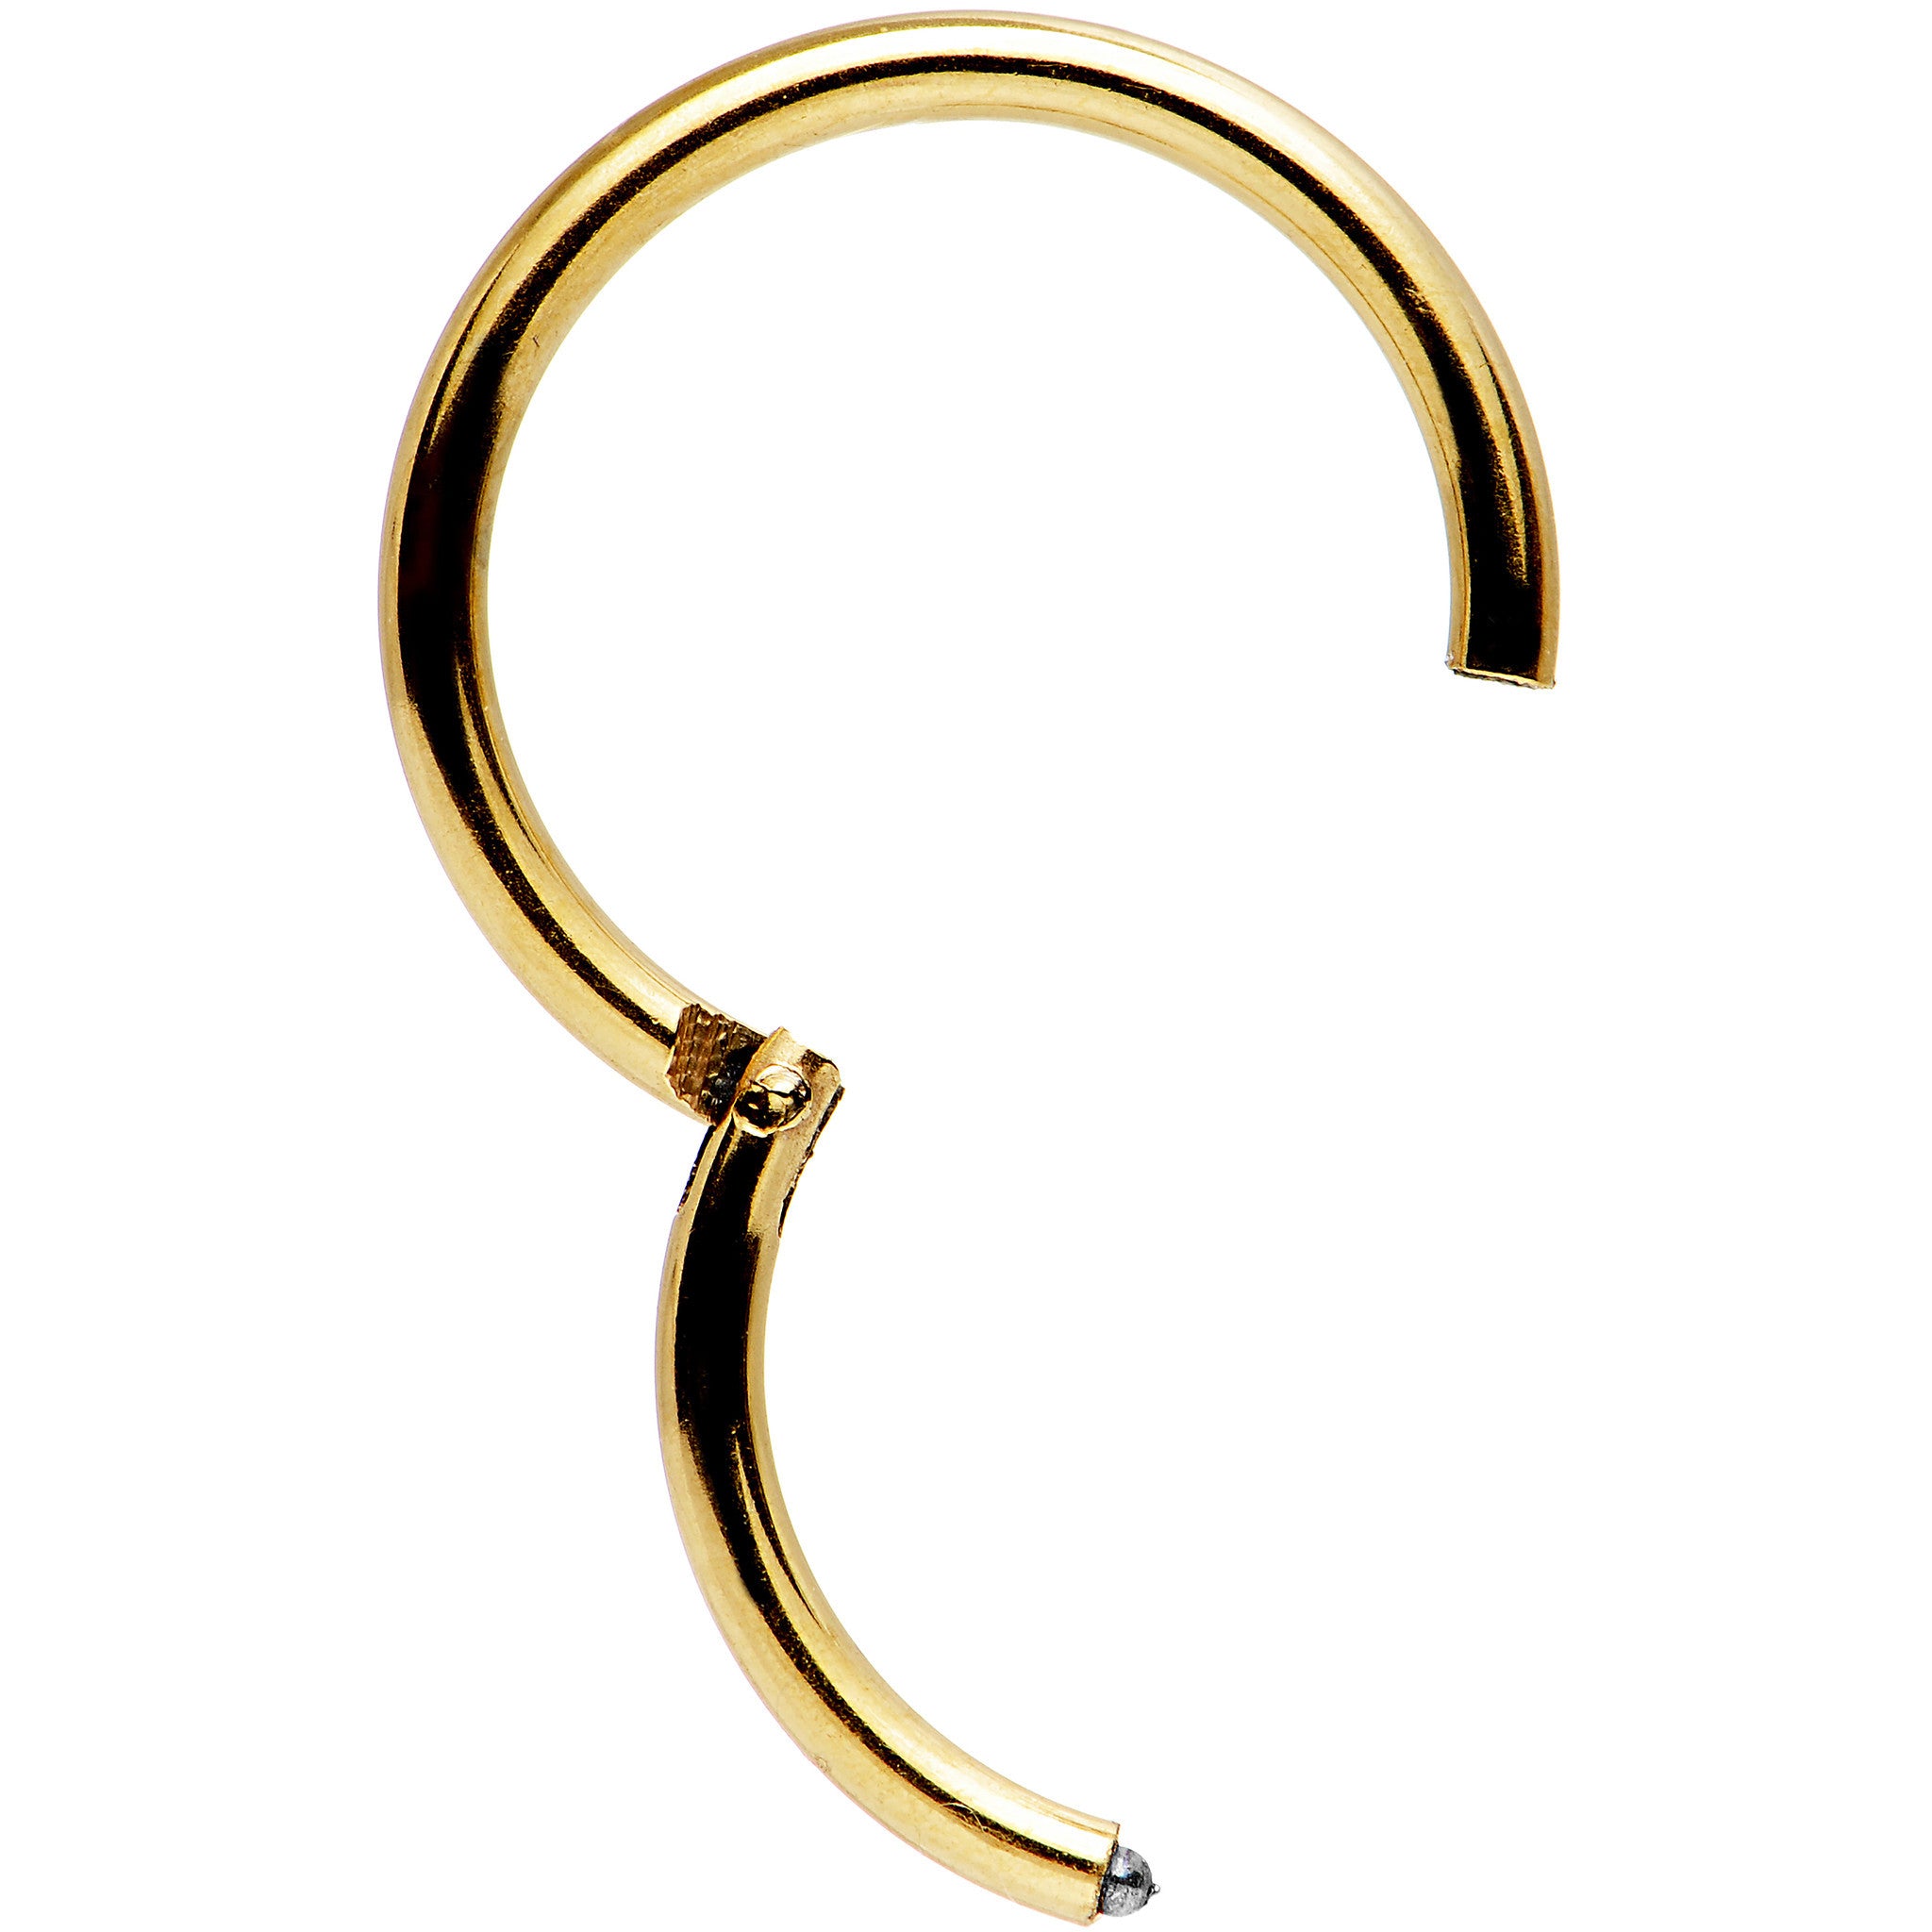 16 Gauge 3/8 Gold Tone Anodized Hinged Segment Ring